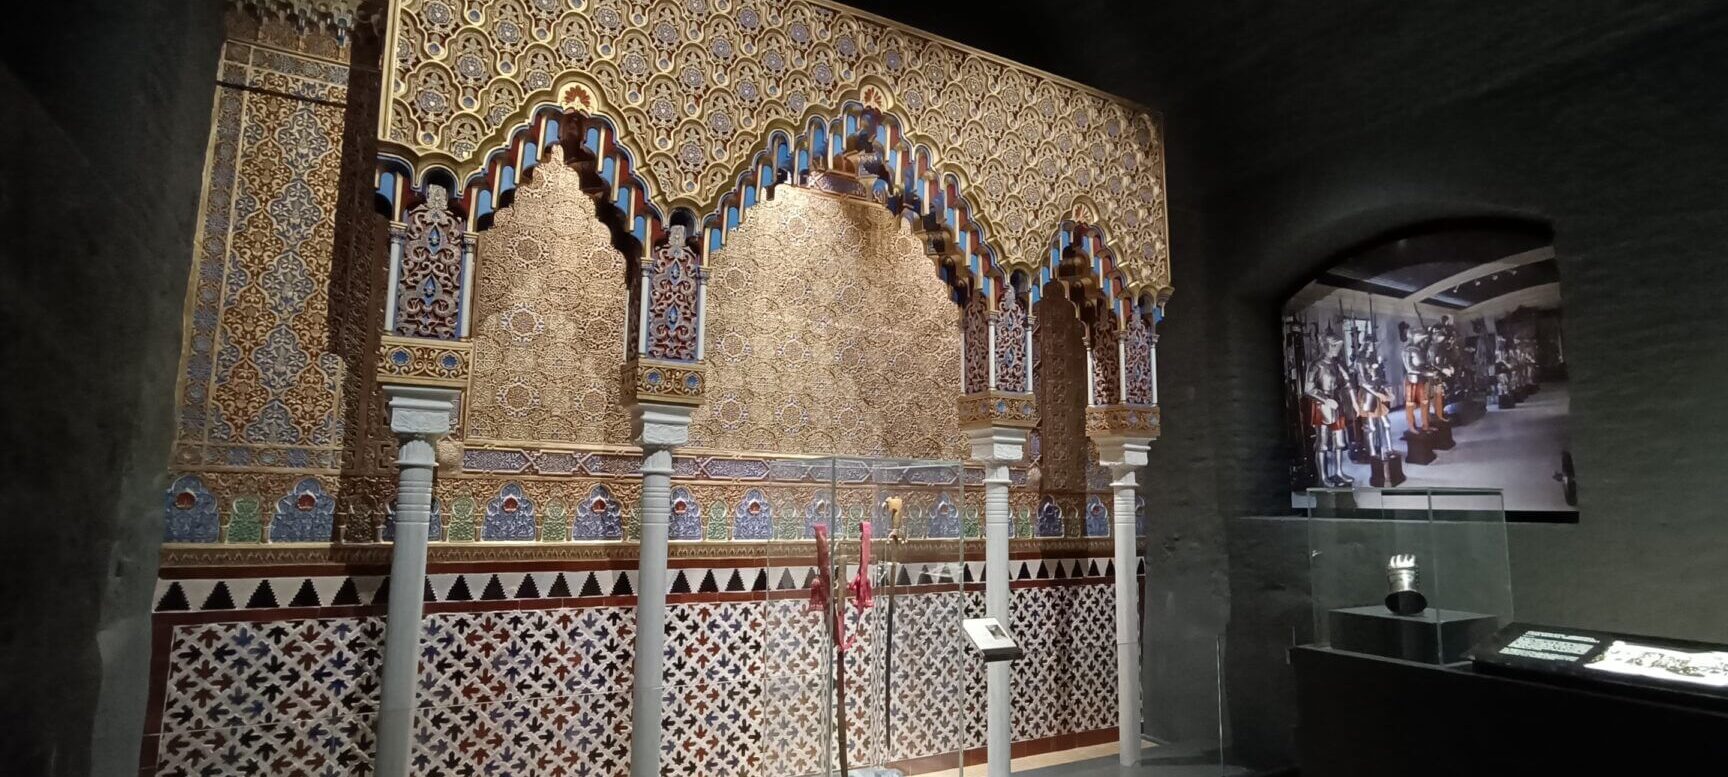 MUSEO DEL EJÉRCITO		Toledo	Toledo	Museo